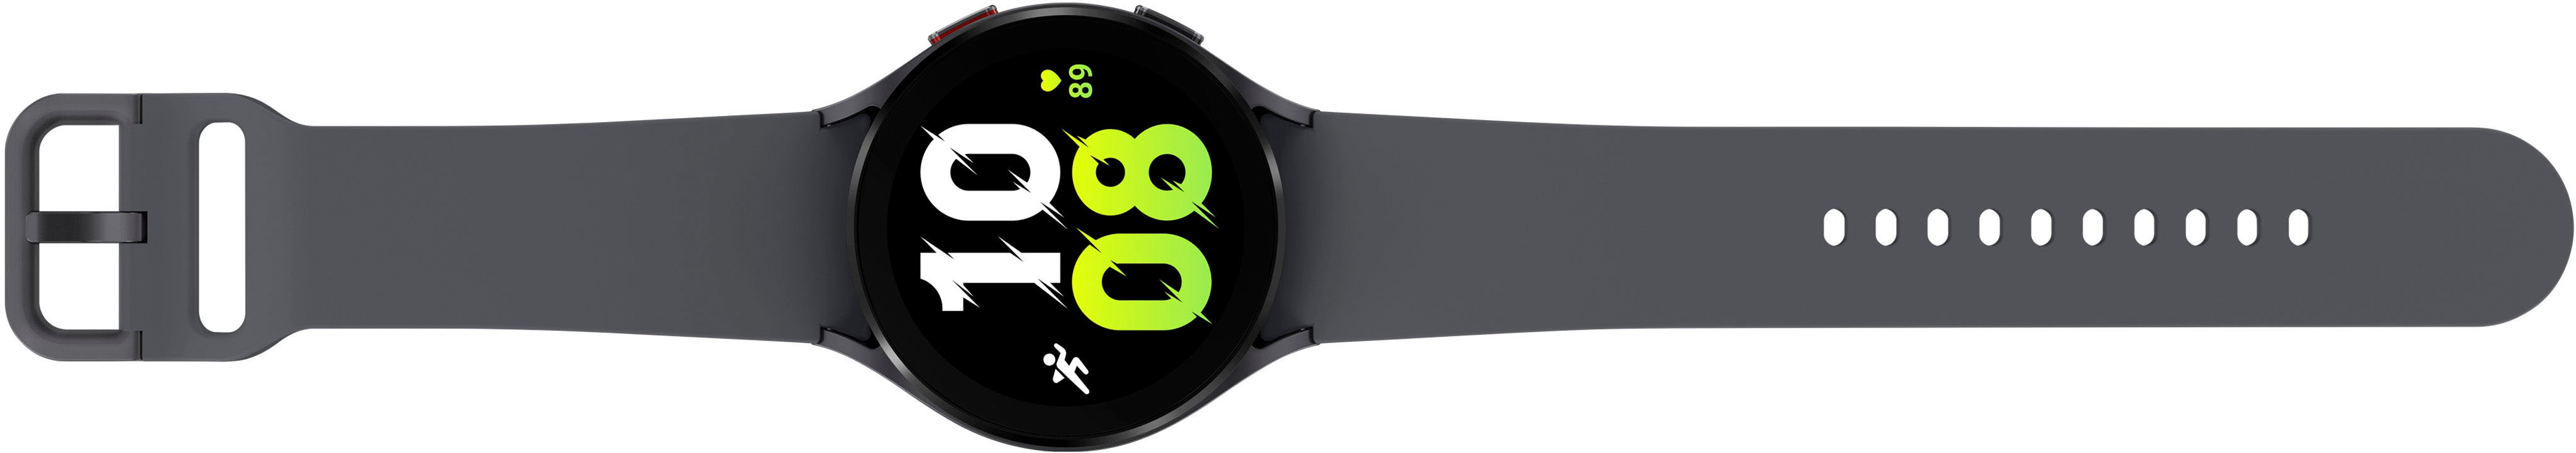 Samsung Galaxy Watch5 Pro Titanium Smartwatch 45mm LTE Gray SM-R925UZTAXAA  - Best Buy